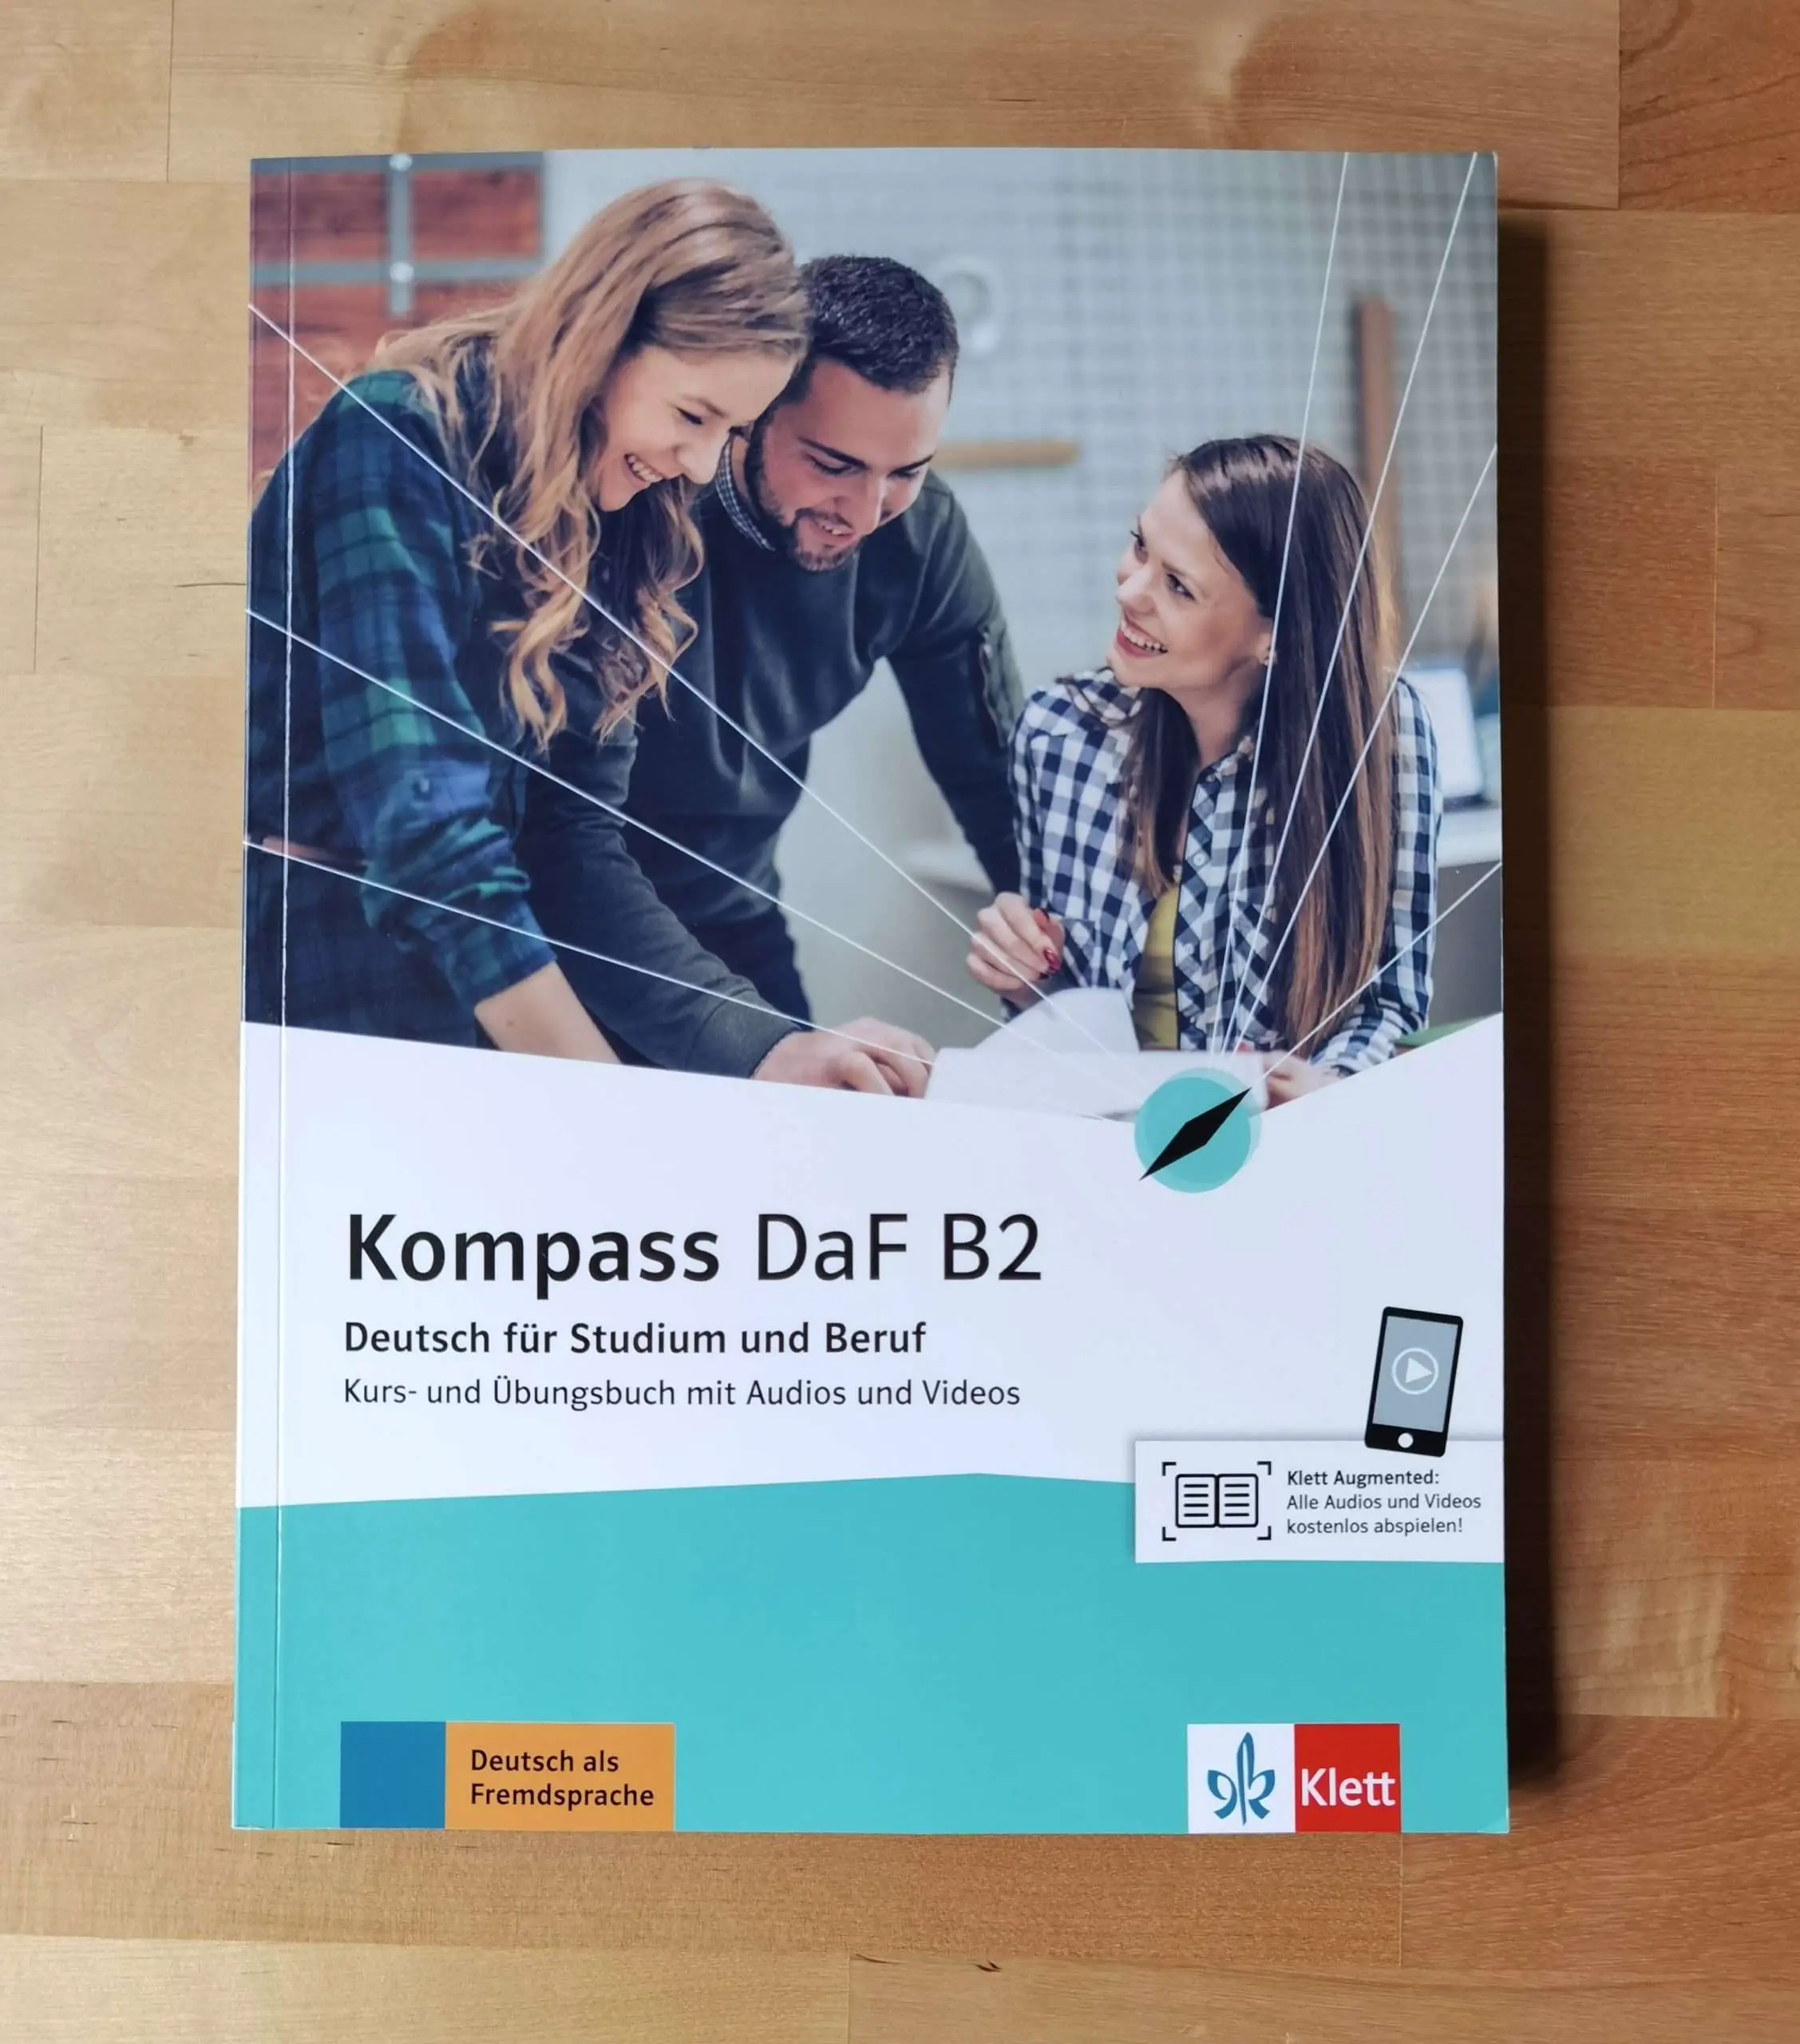 Kompass DaF B2 Klett Sprachen Verlag scaled